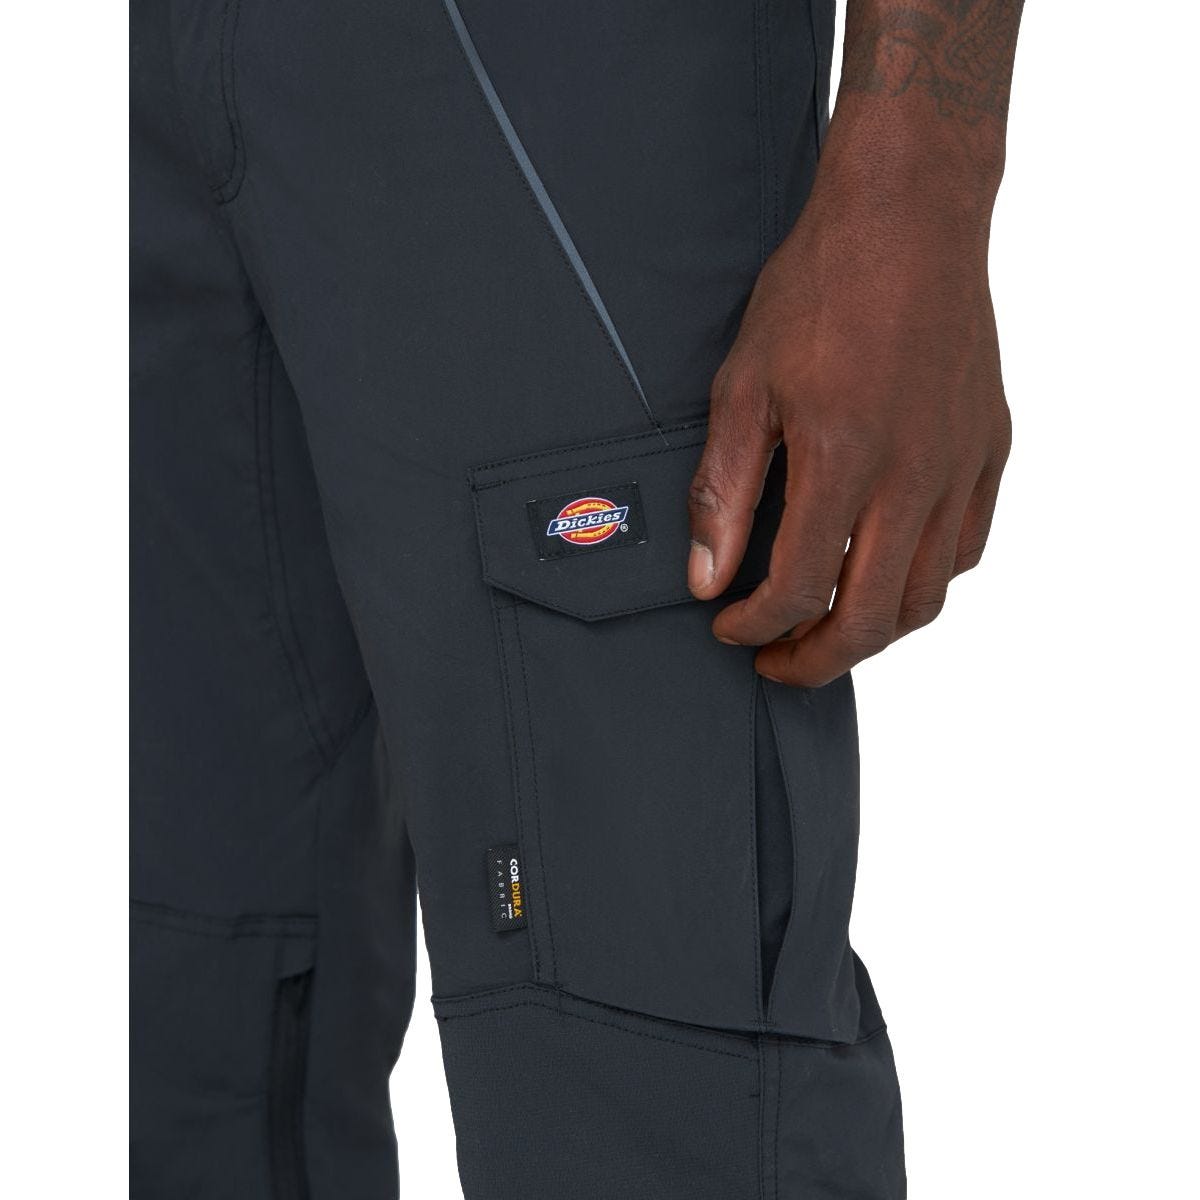 Pantalon léger Flex Noir - Dickies - Taille 46 4